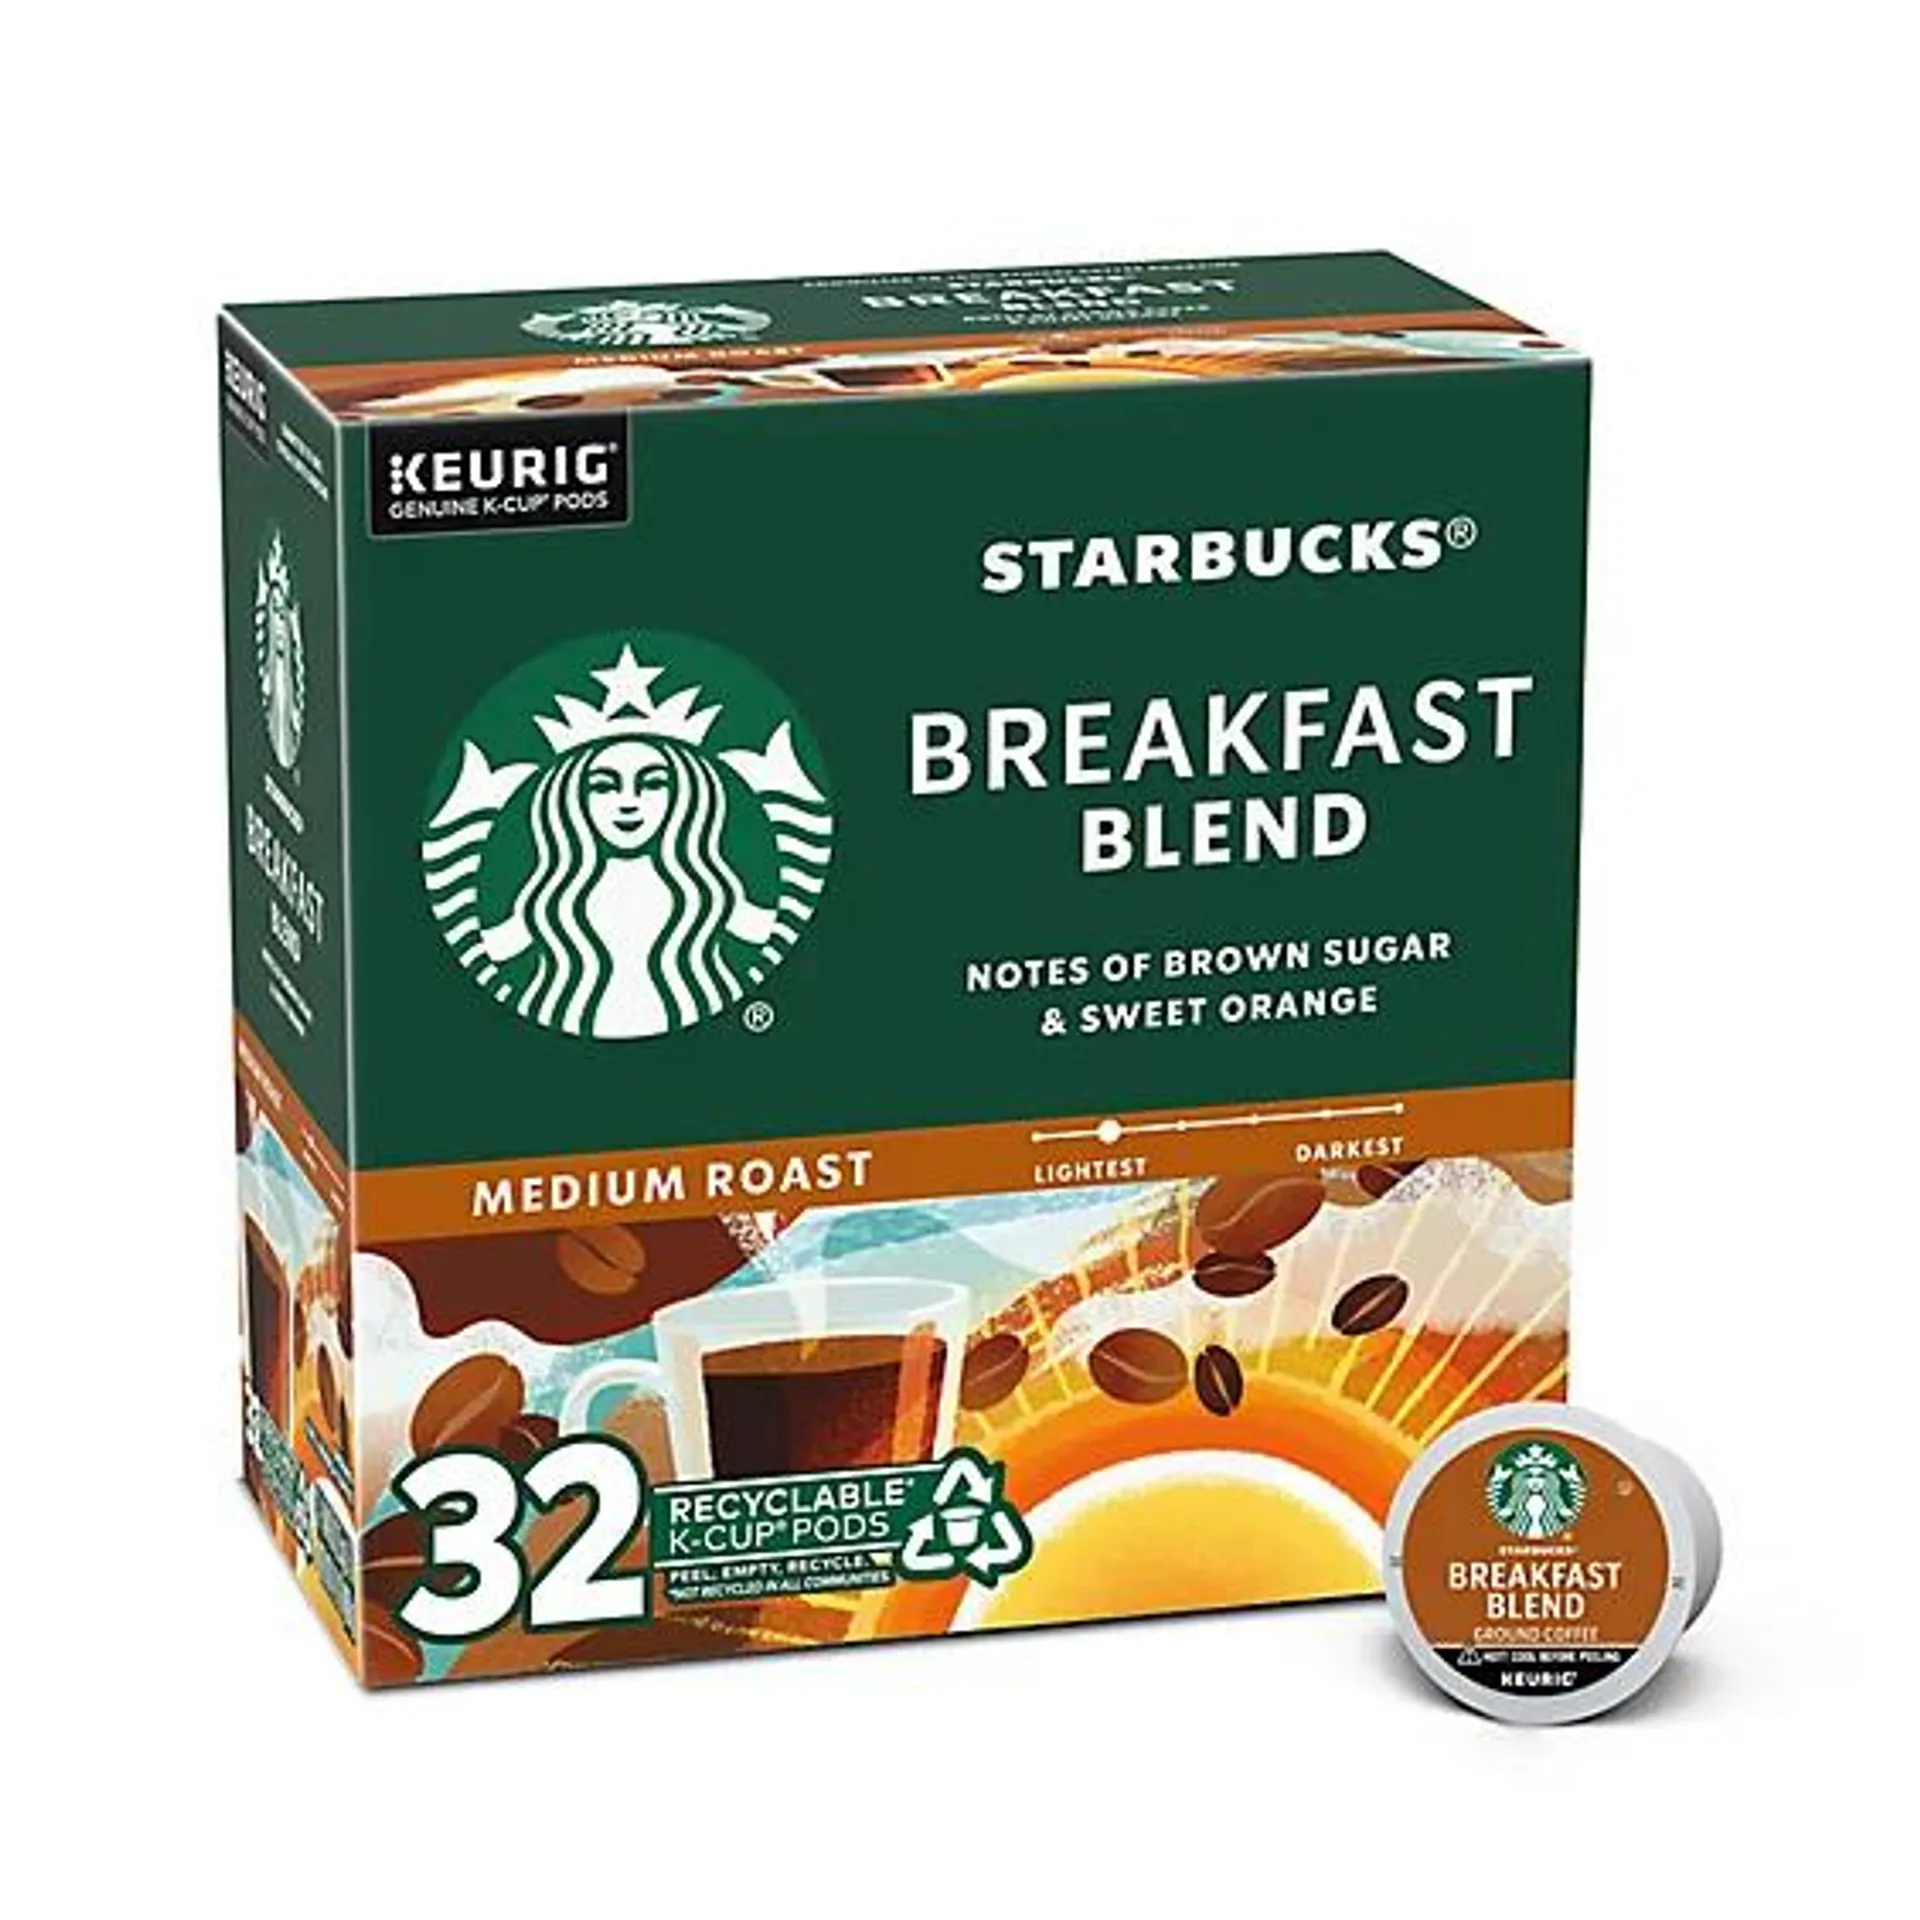 Starbucks Breakfast Blend 100% Arabica Medium Roast K Cup Coffee Pods Box 32 Count - Each